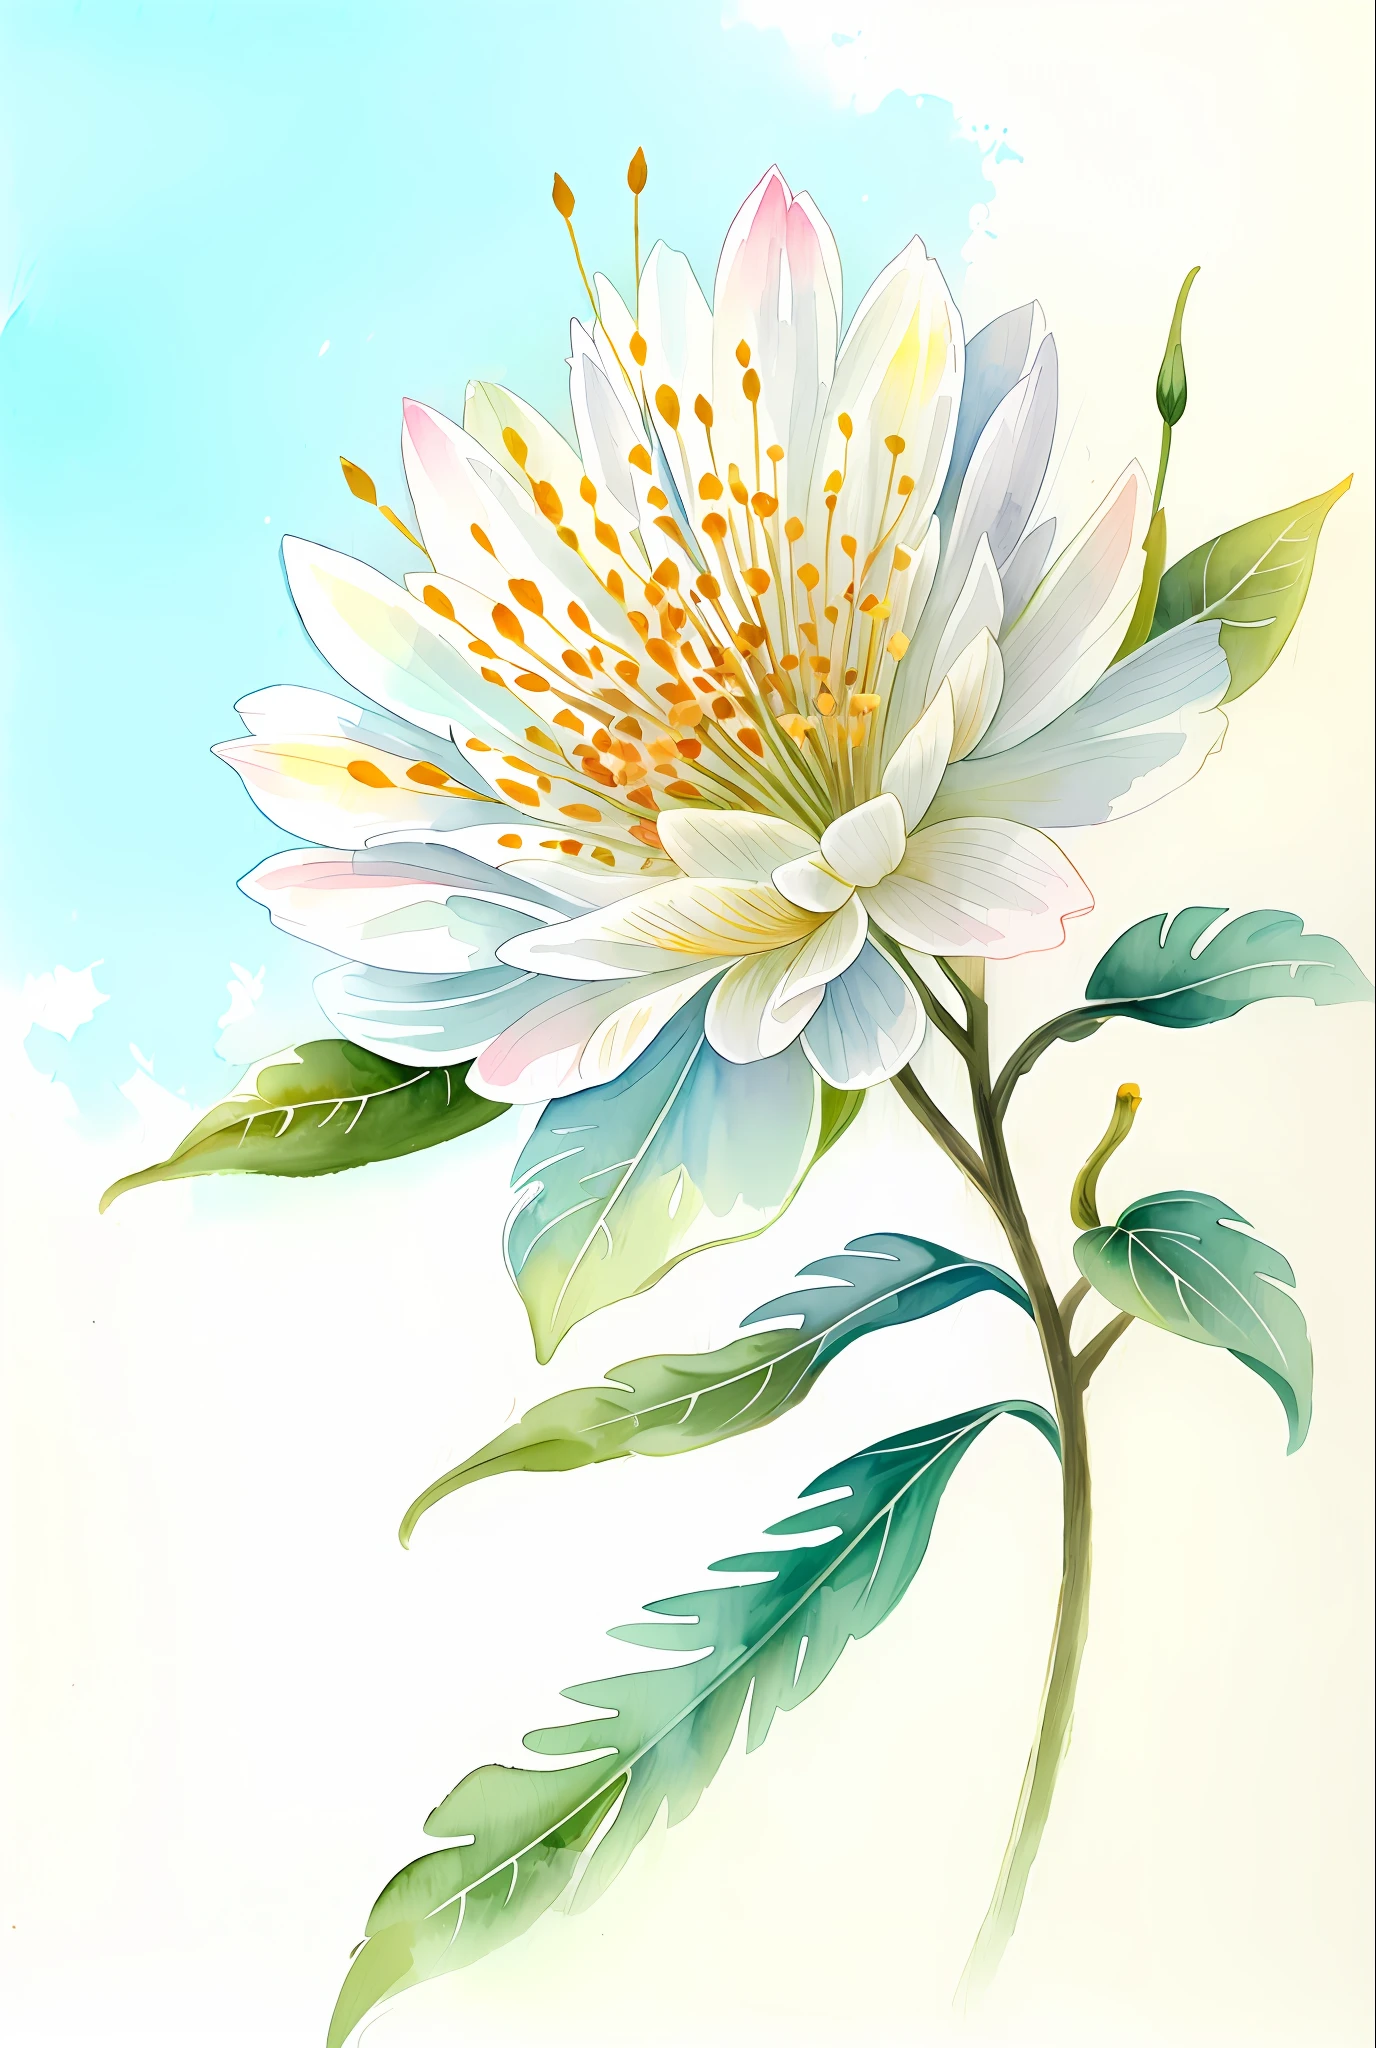 ( акварель \(Половина\), рисунок, красивый цветок ромашки.